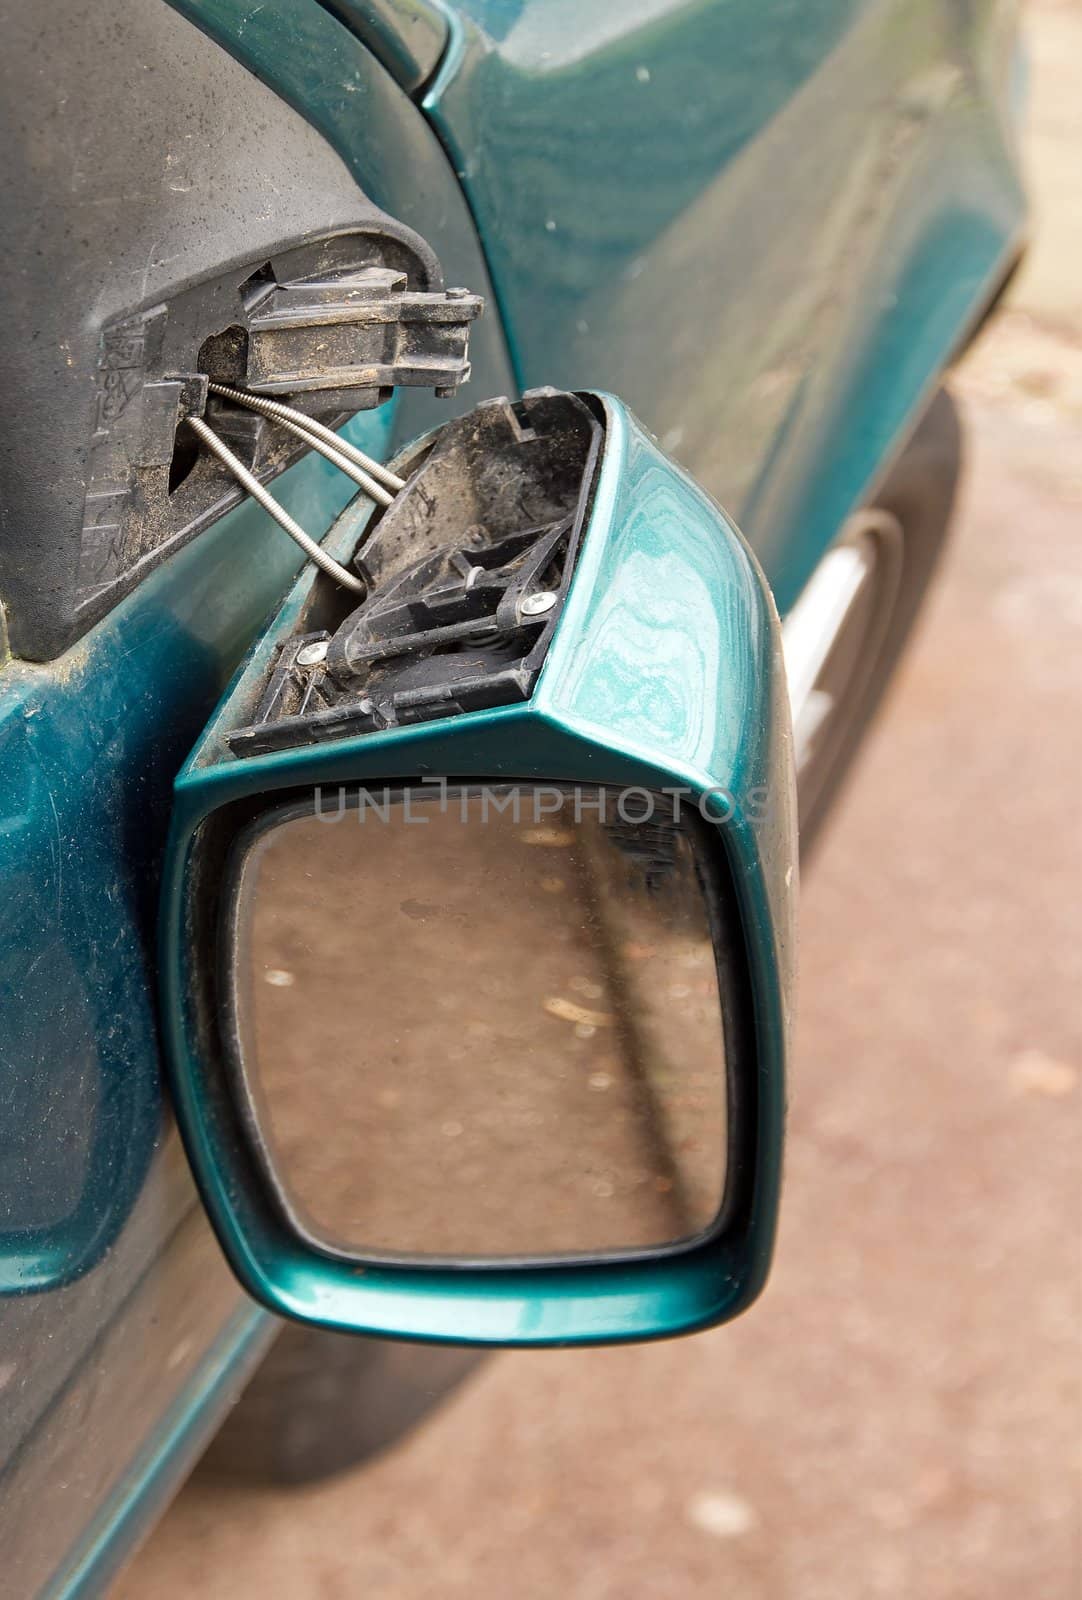 mirror of a car broken, vandalism in city